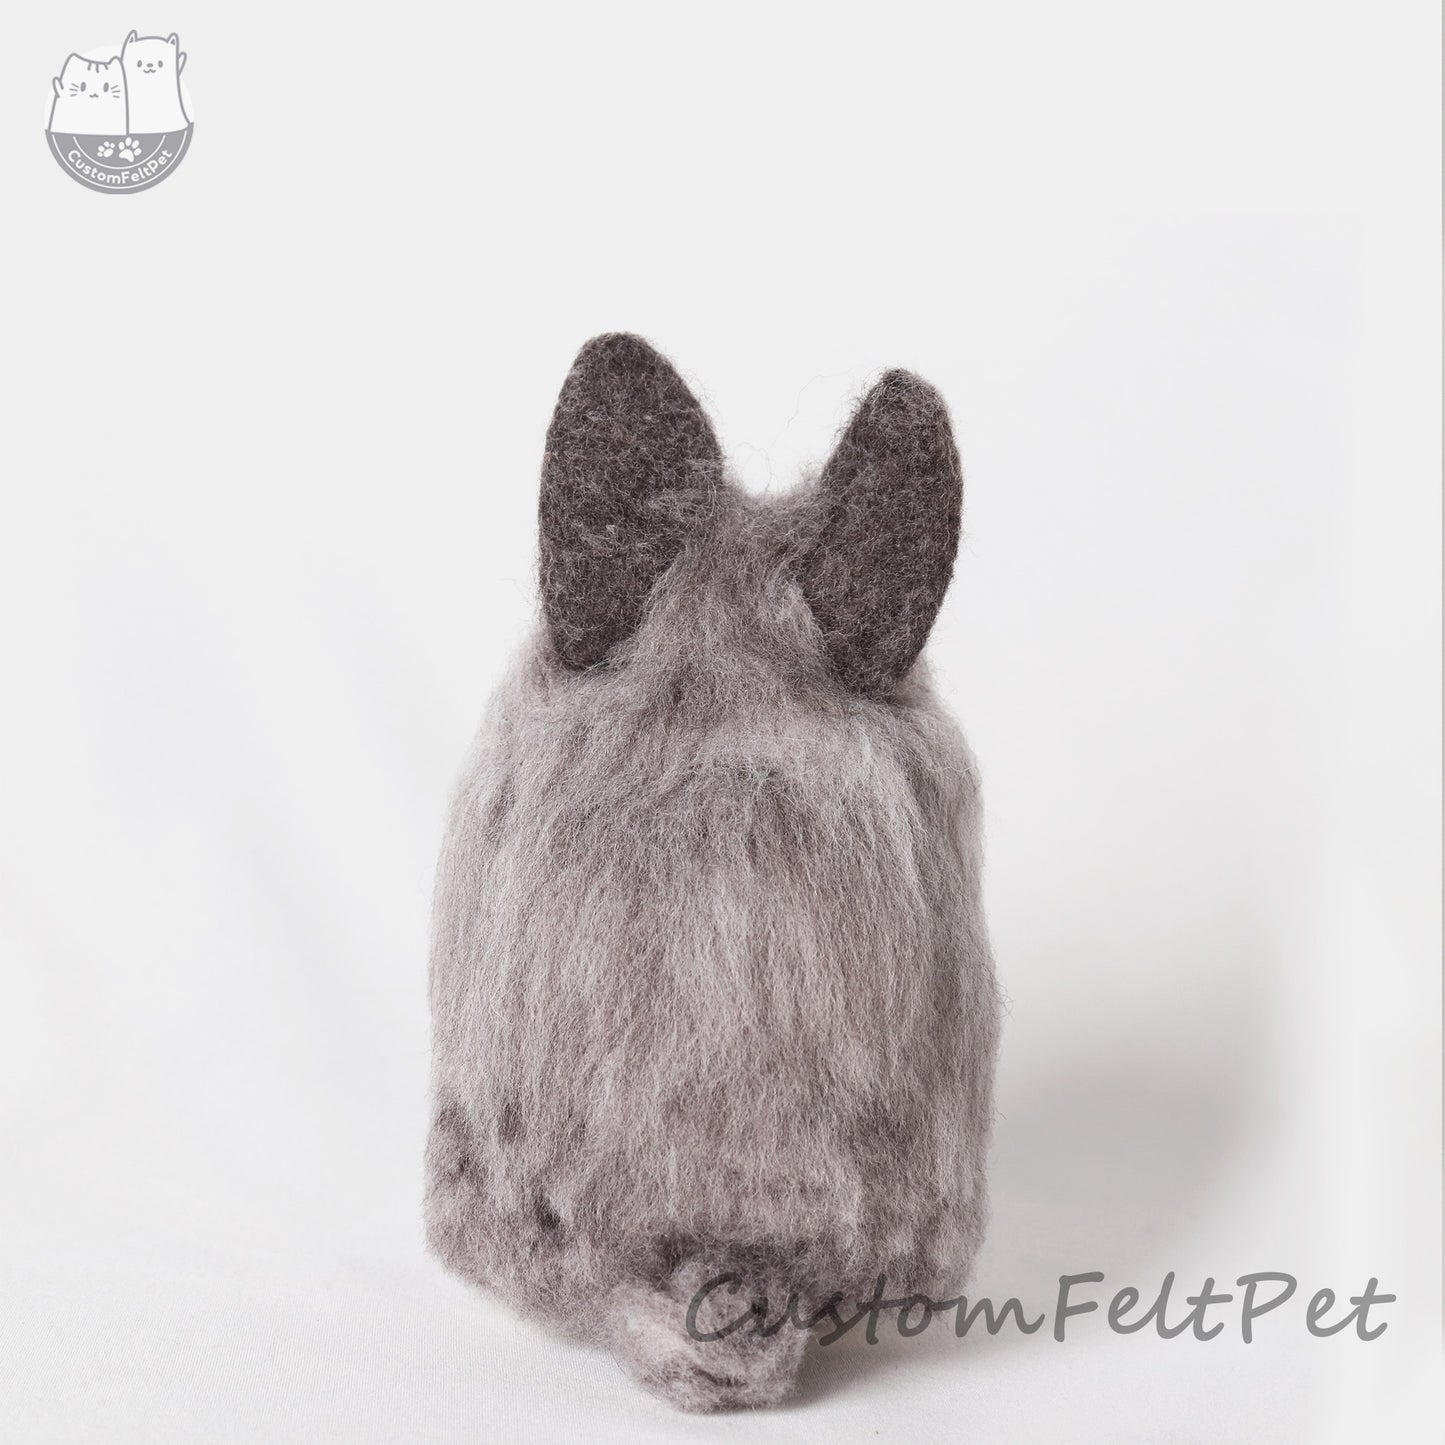 Custom Felt Rabbit Bunny Memorial